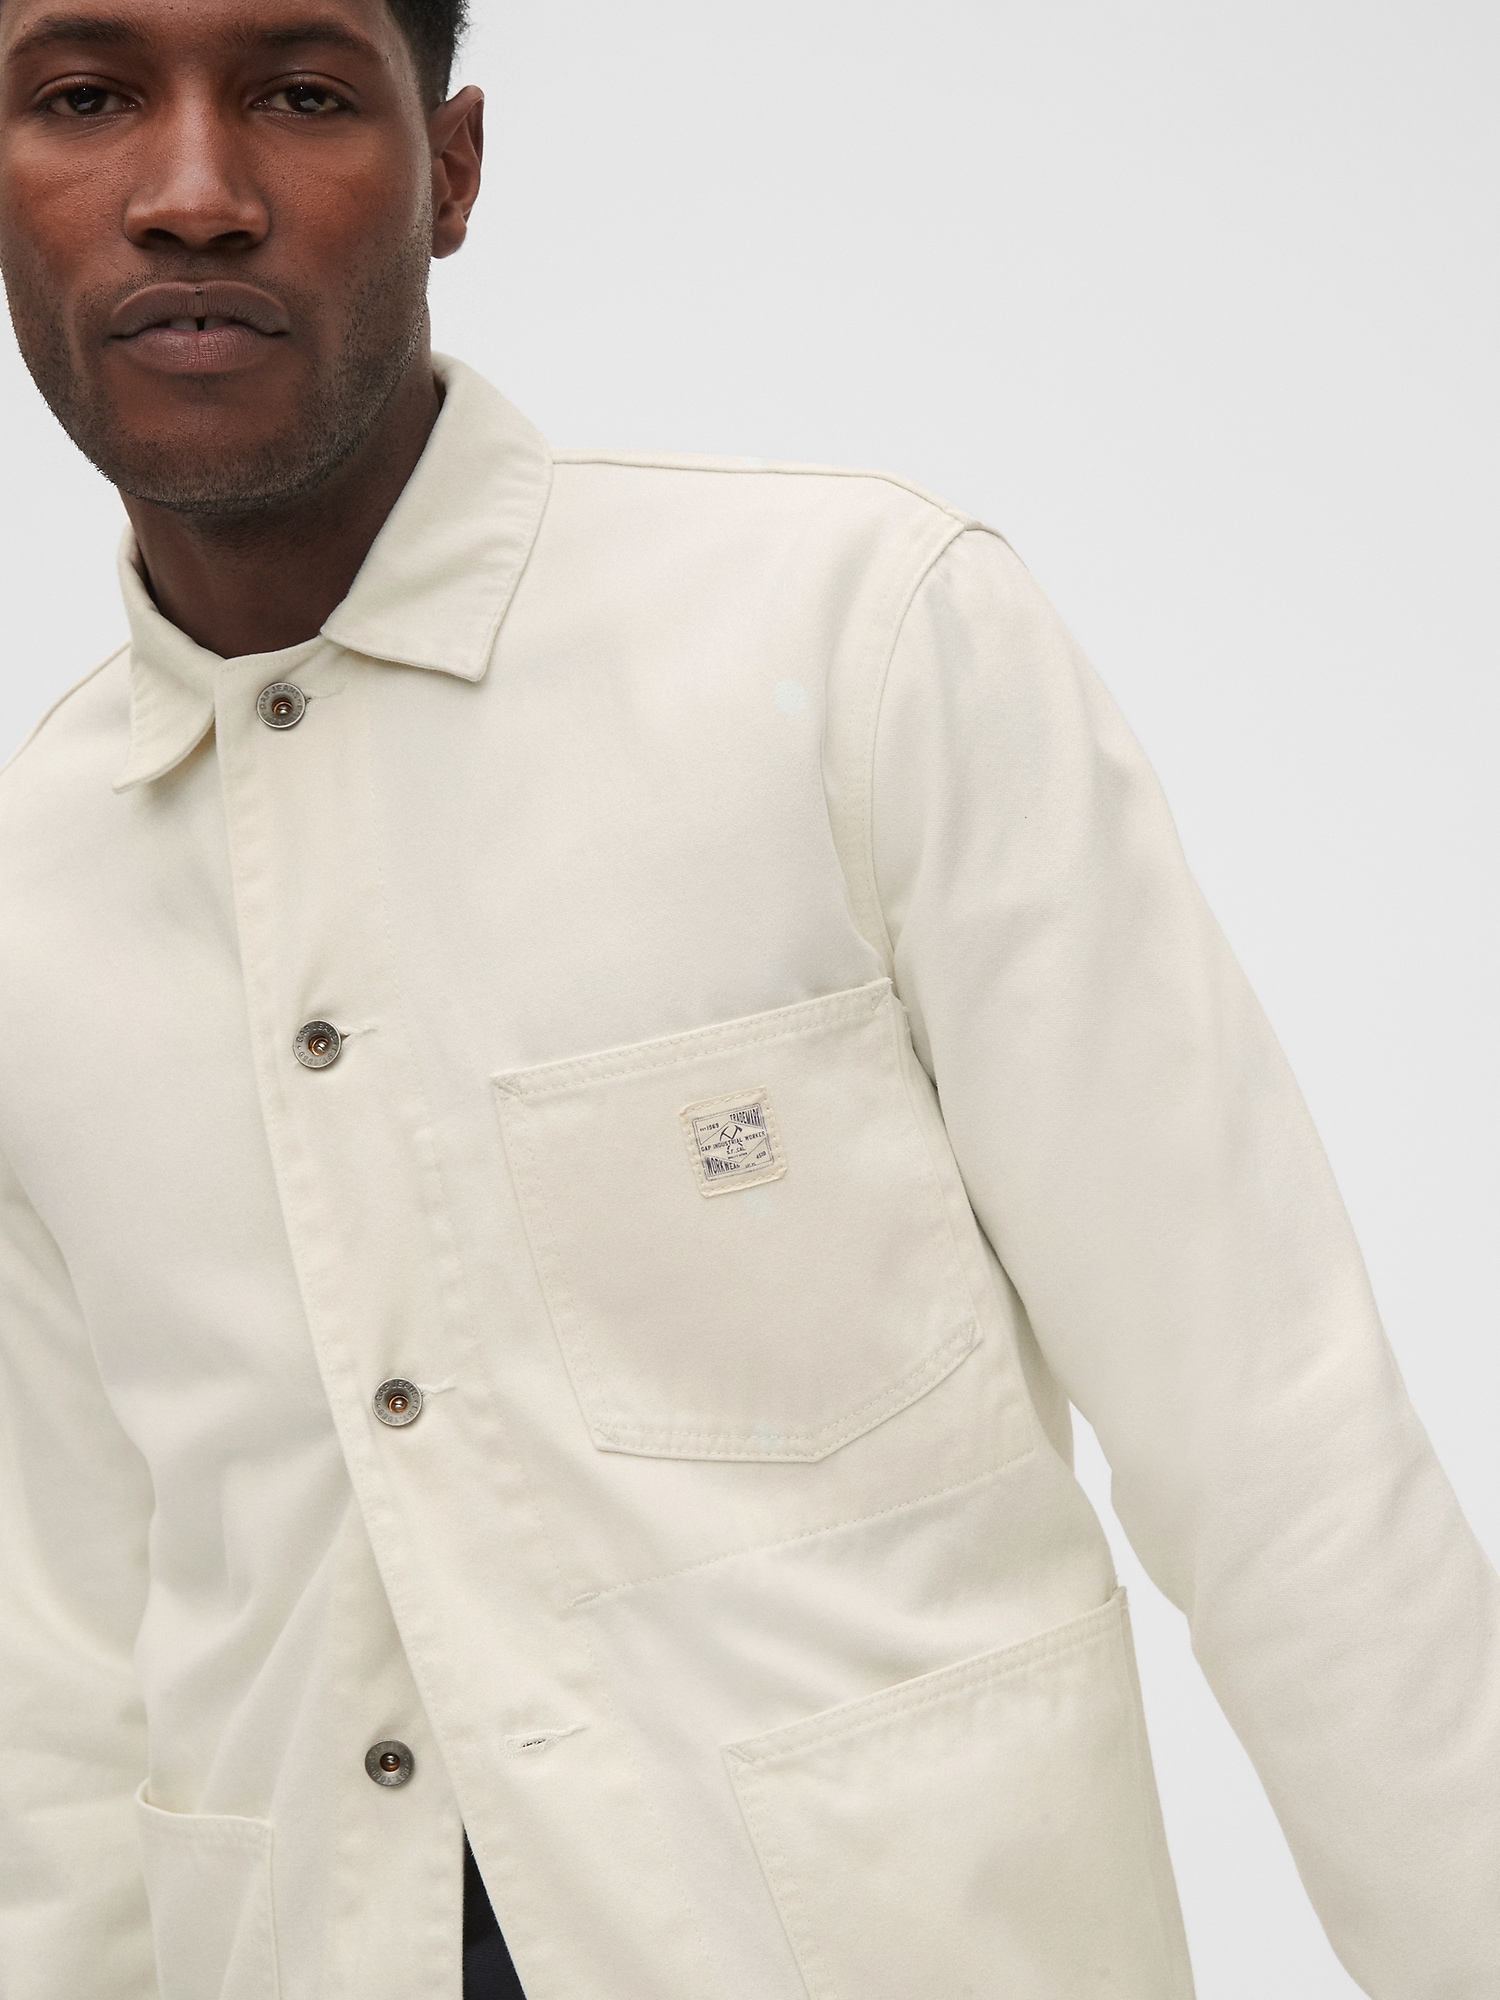 Gap clothing company, Jackets & Coats, Vtg Gap Chore Coat Denim Jacket  Made In Usa Workwear Rrl Lvc Size S